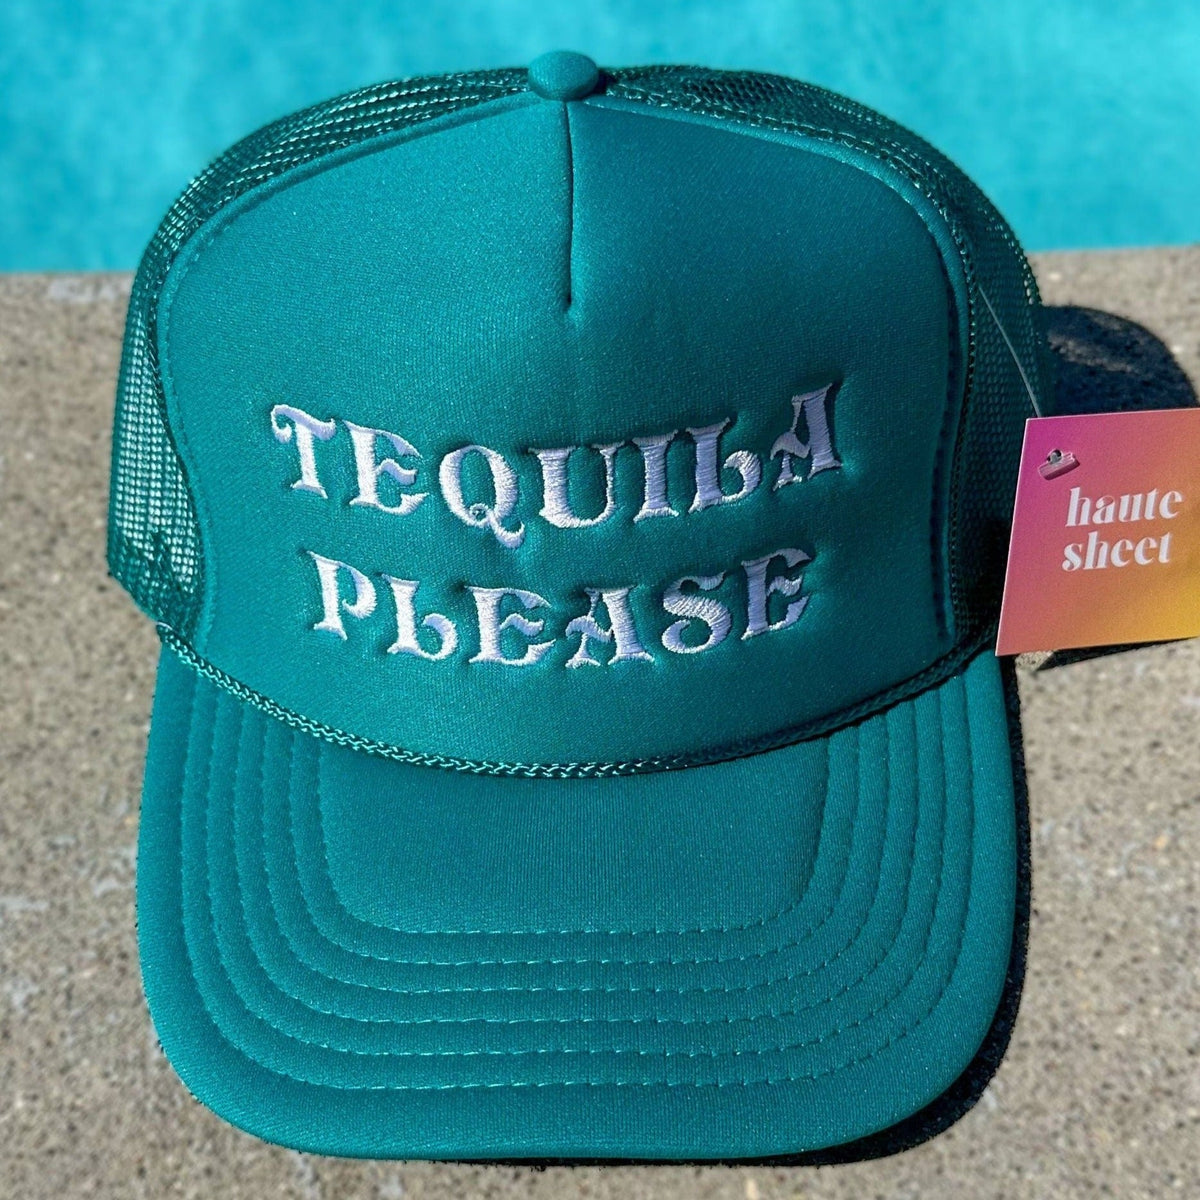 Tequila Please | Funny Trucker Hats by Haute Sheet Trucker Hat Hats TheFringeCultureCollective